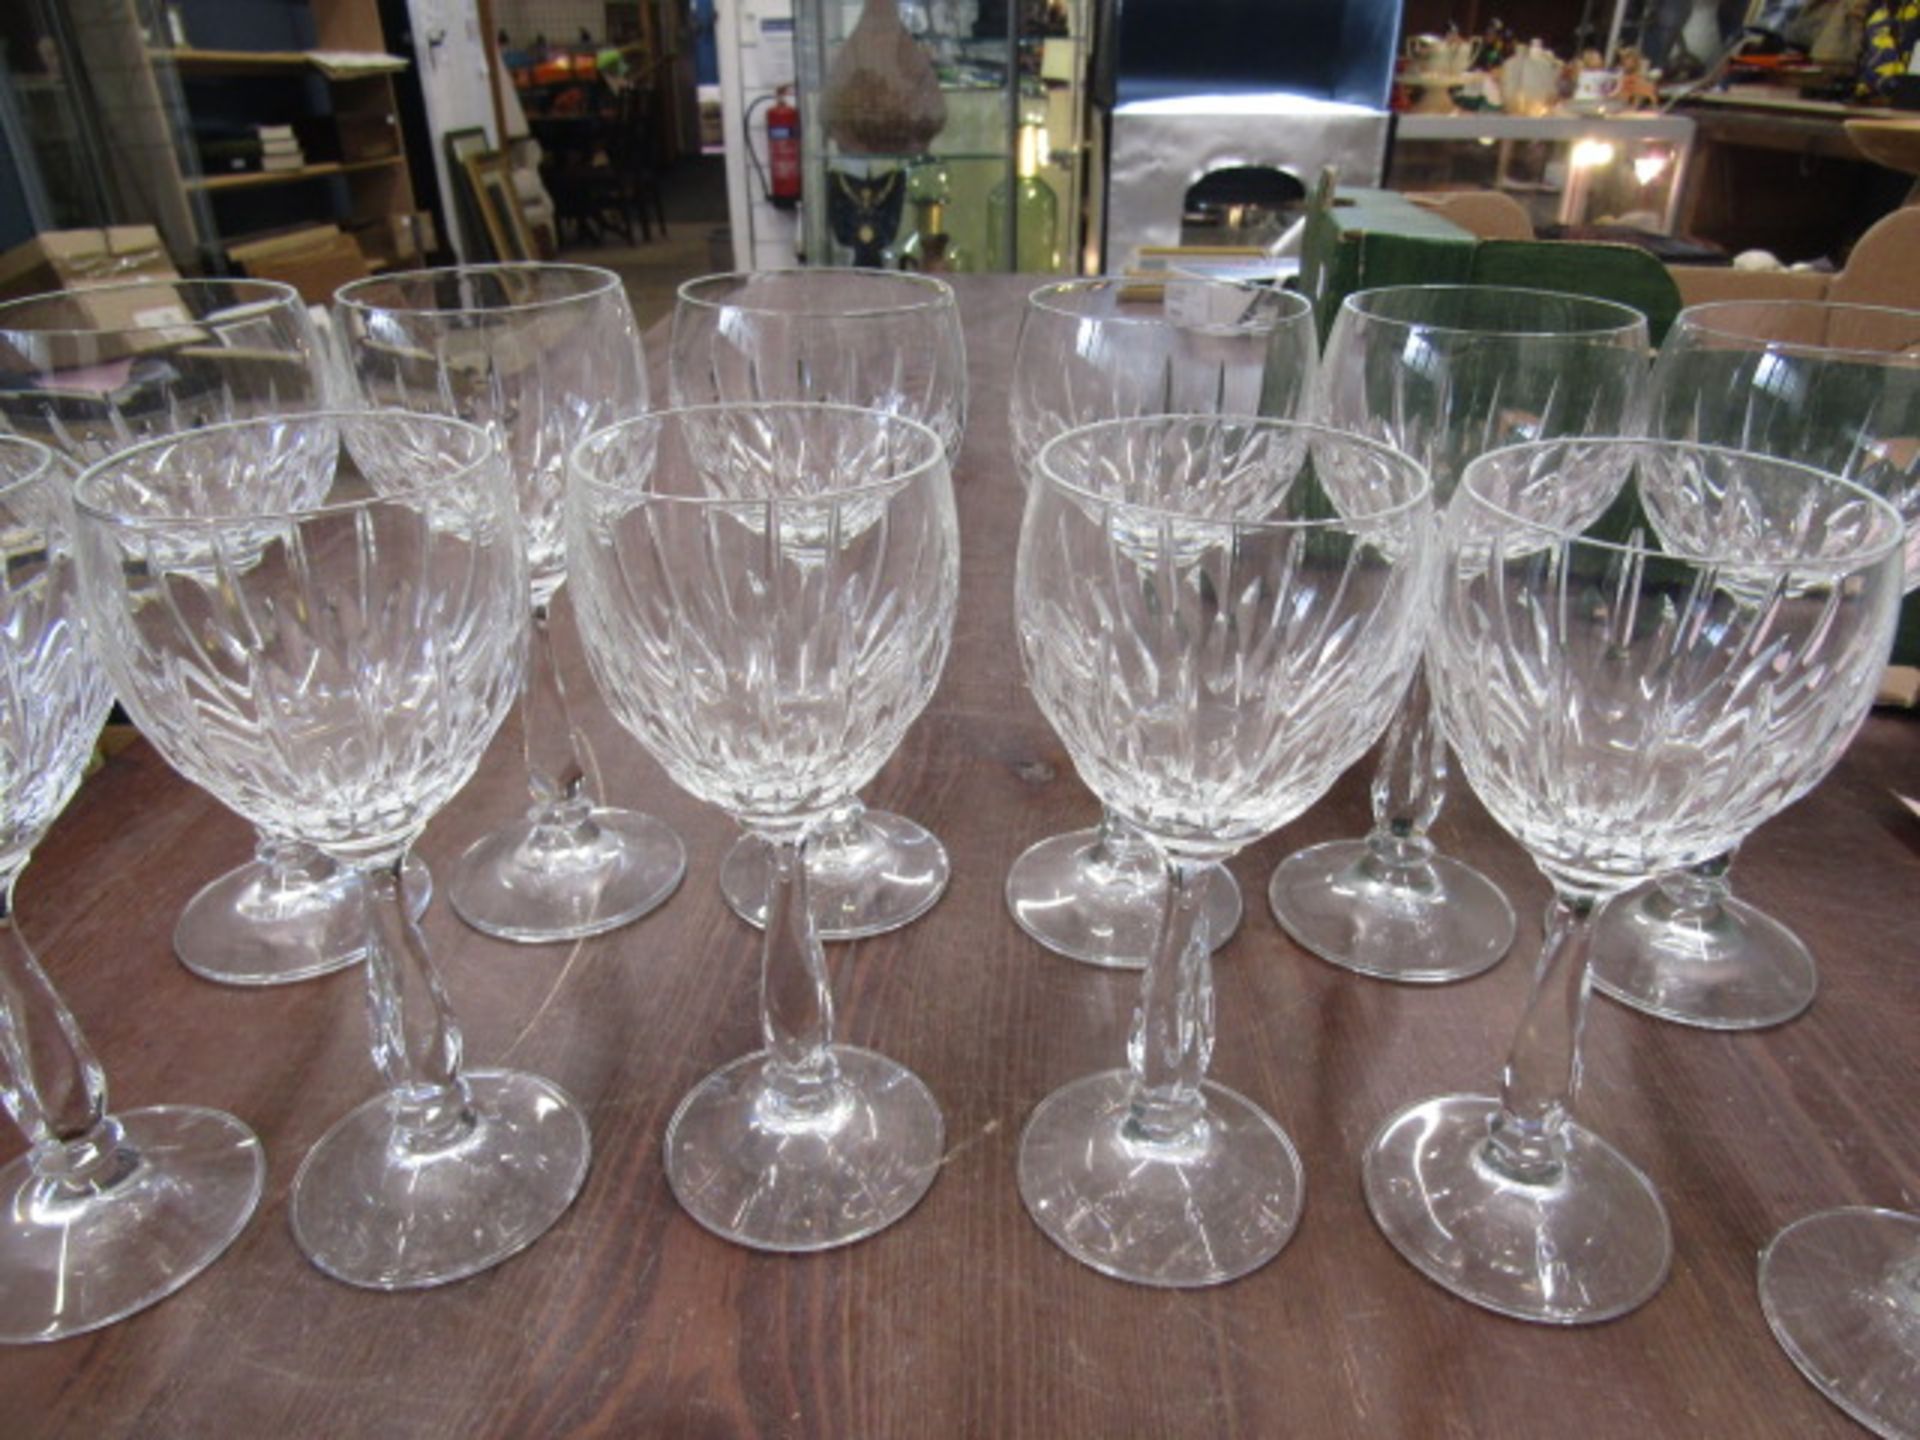 stemmed wine glasses 2 sets of 6 in matching design - Image 2 of 2